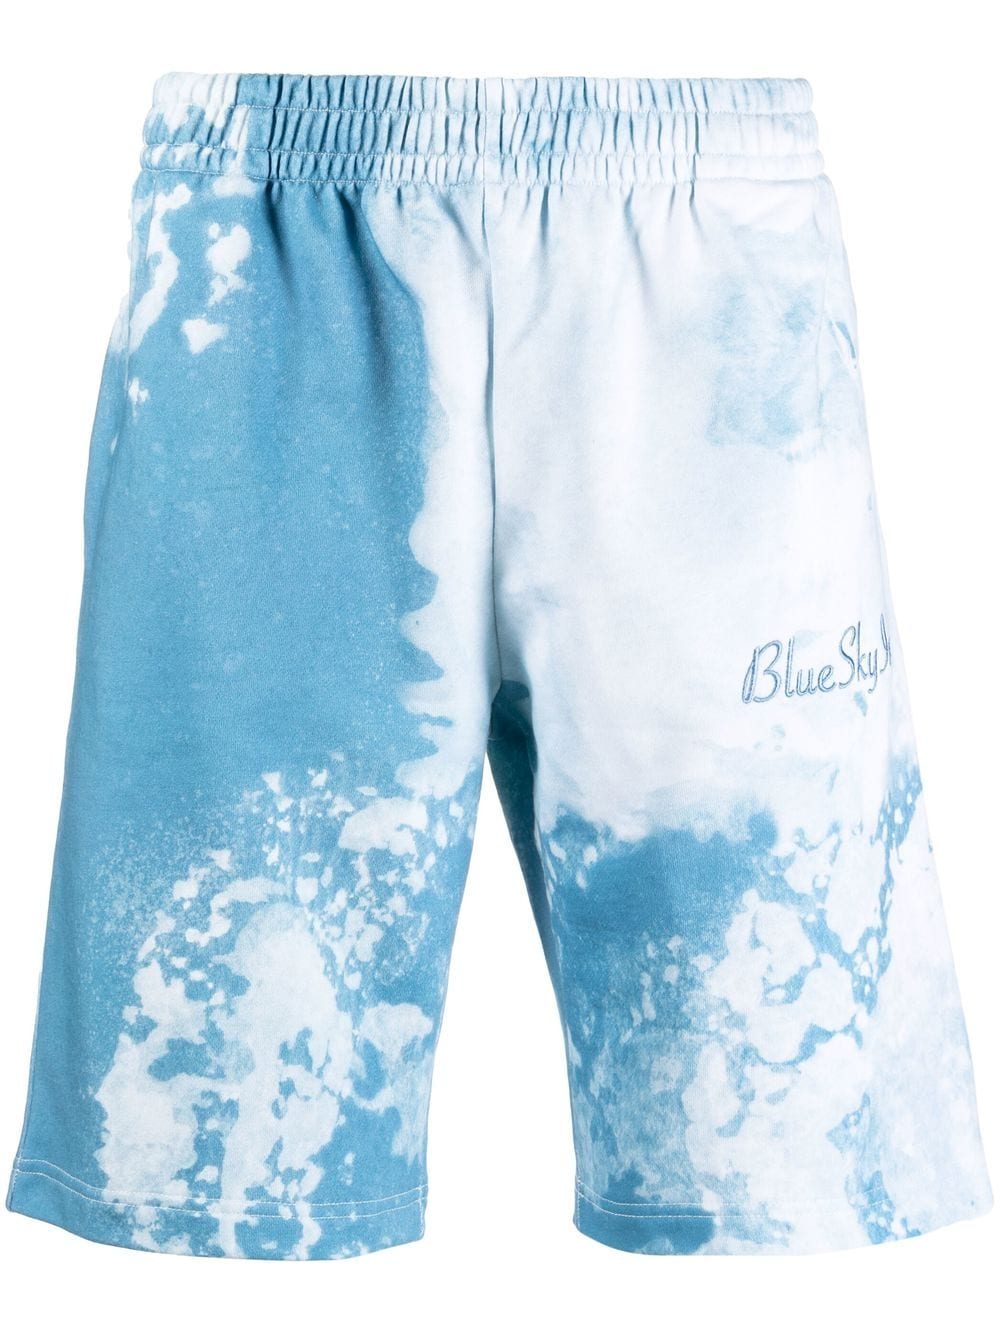 BLUE SKY INN BLUE SKY INN- Printed Shorts